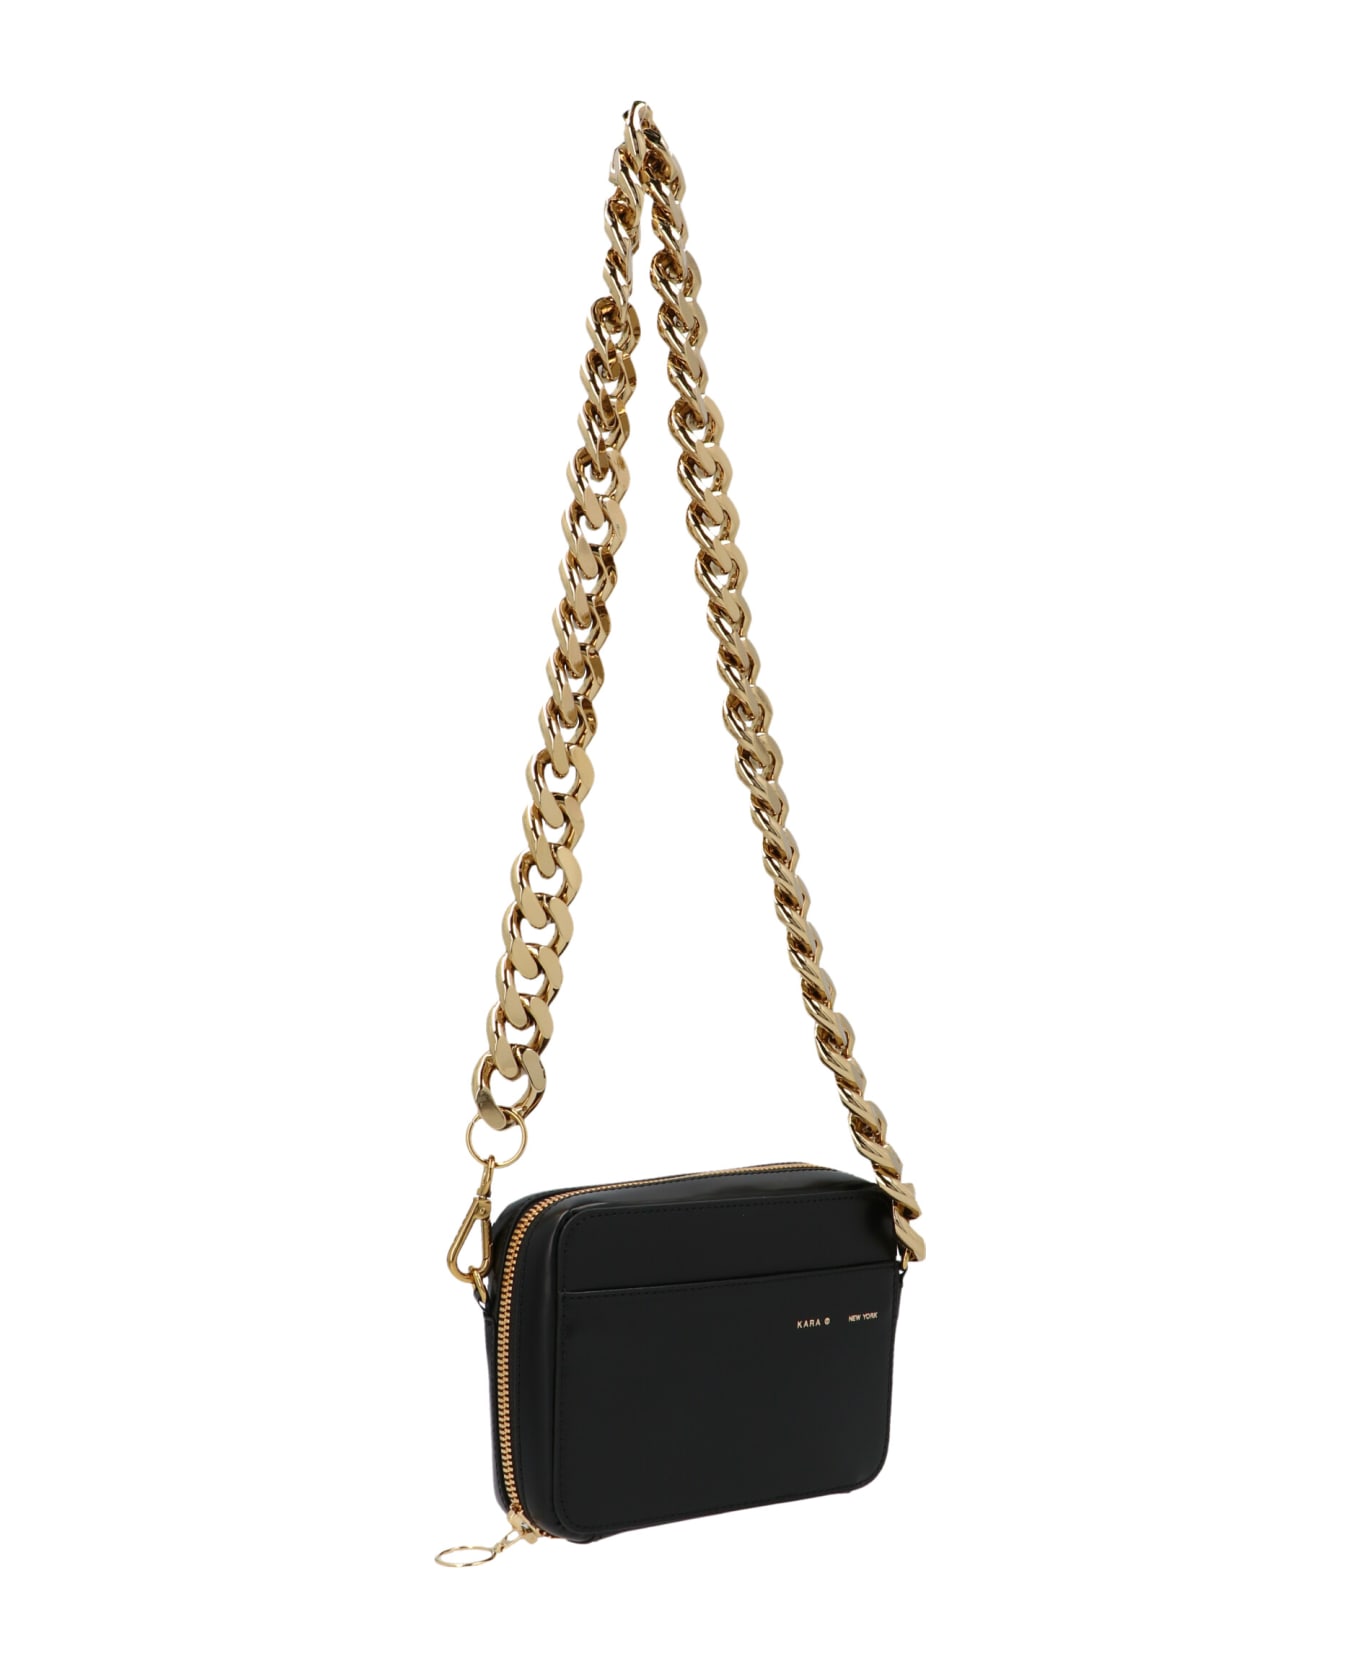 Kara 'chain' Bag - Black Gold